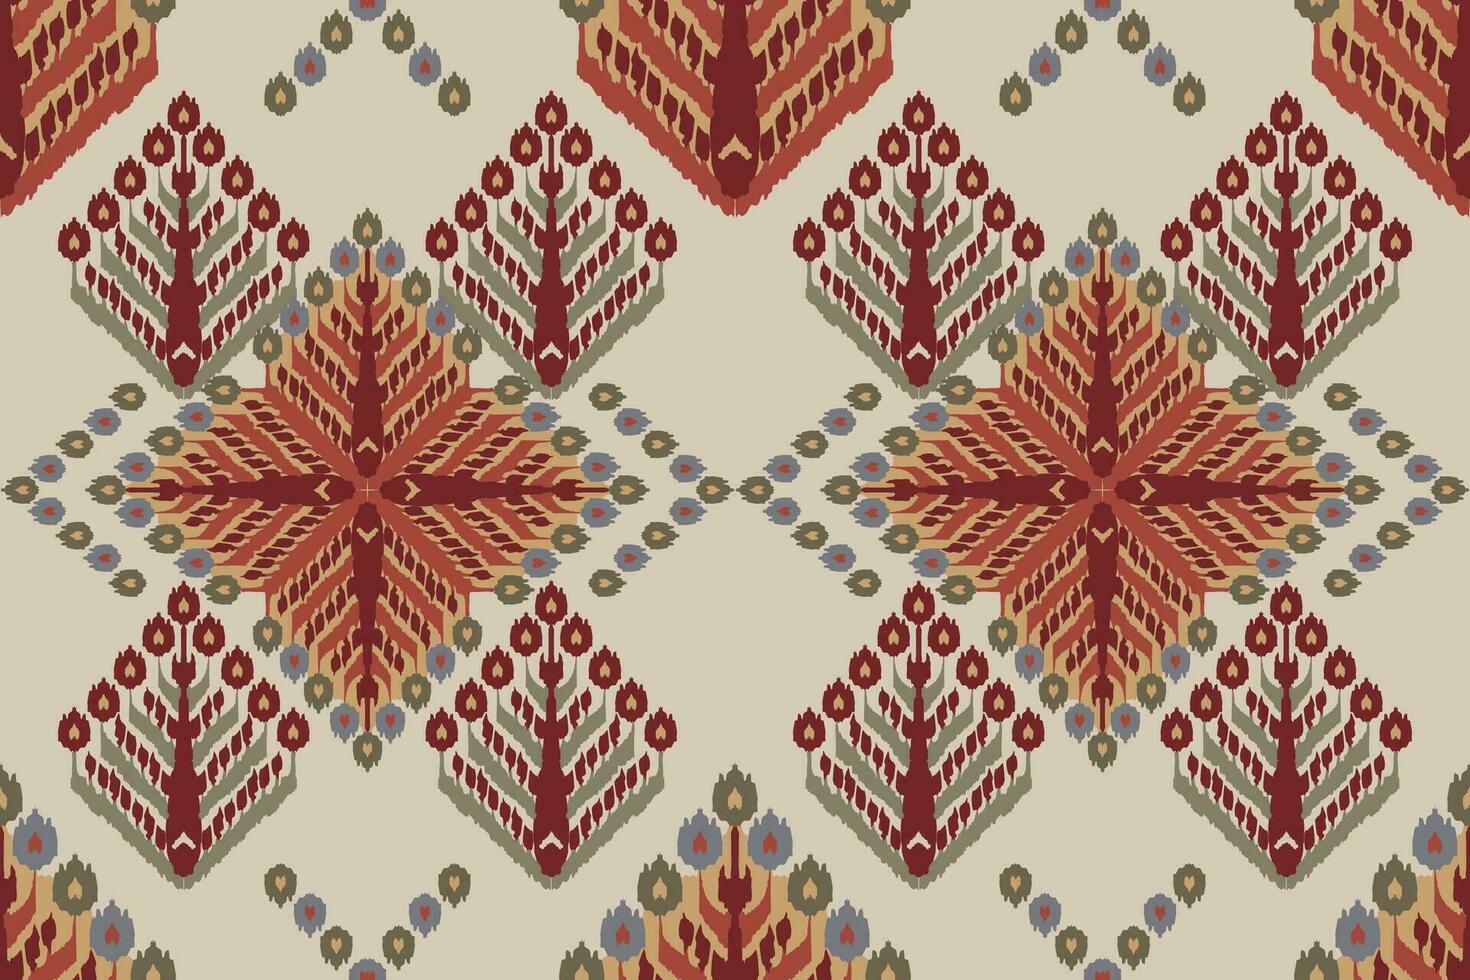 ikat tribal indiano desatado padronizar. étnico asteca tecido tapete mandala enfeite nativo boho divisa têxtil.geométrico africano americano oriental tradicional vetor ilustrações. bordado estilo